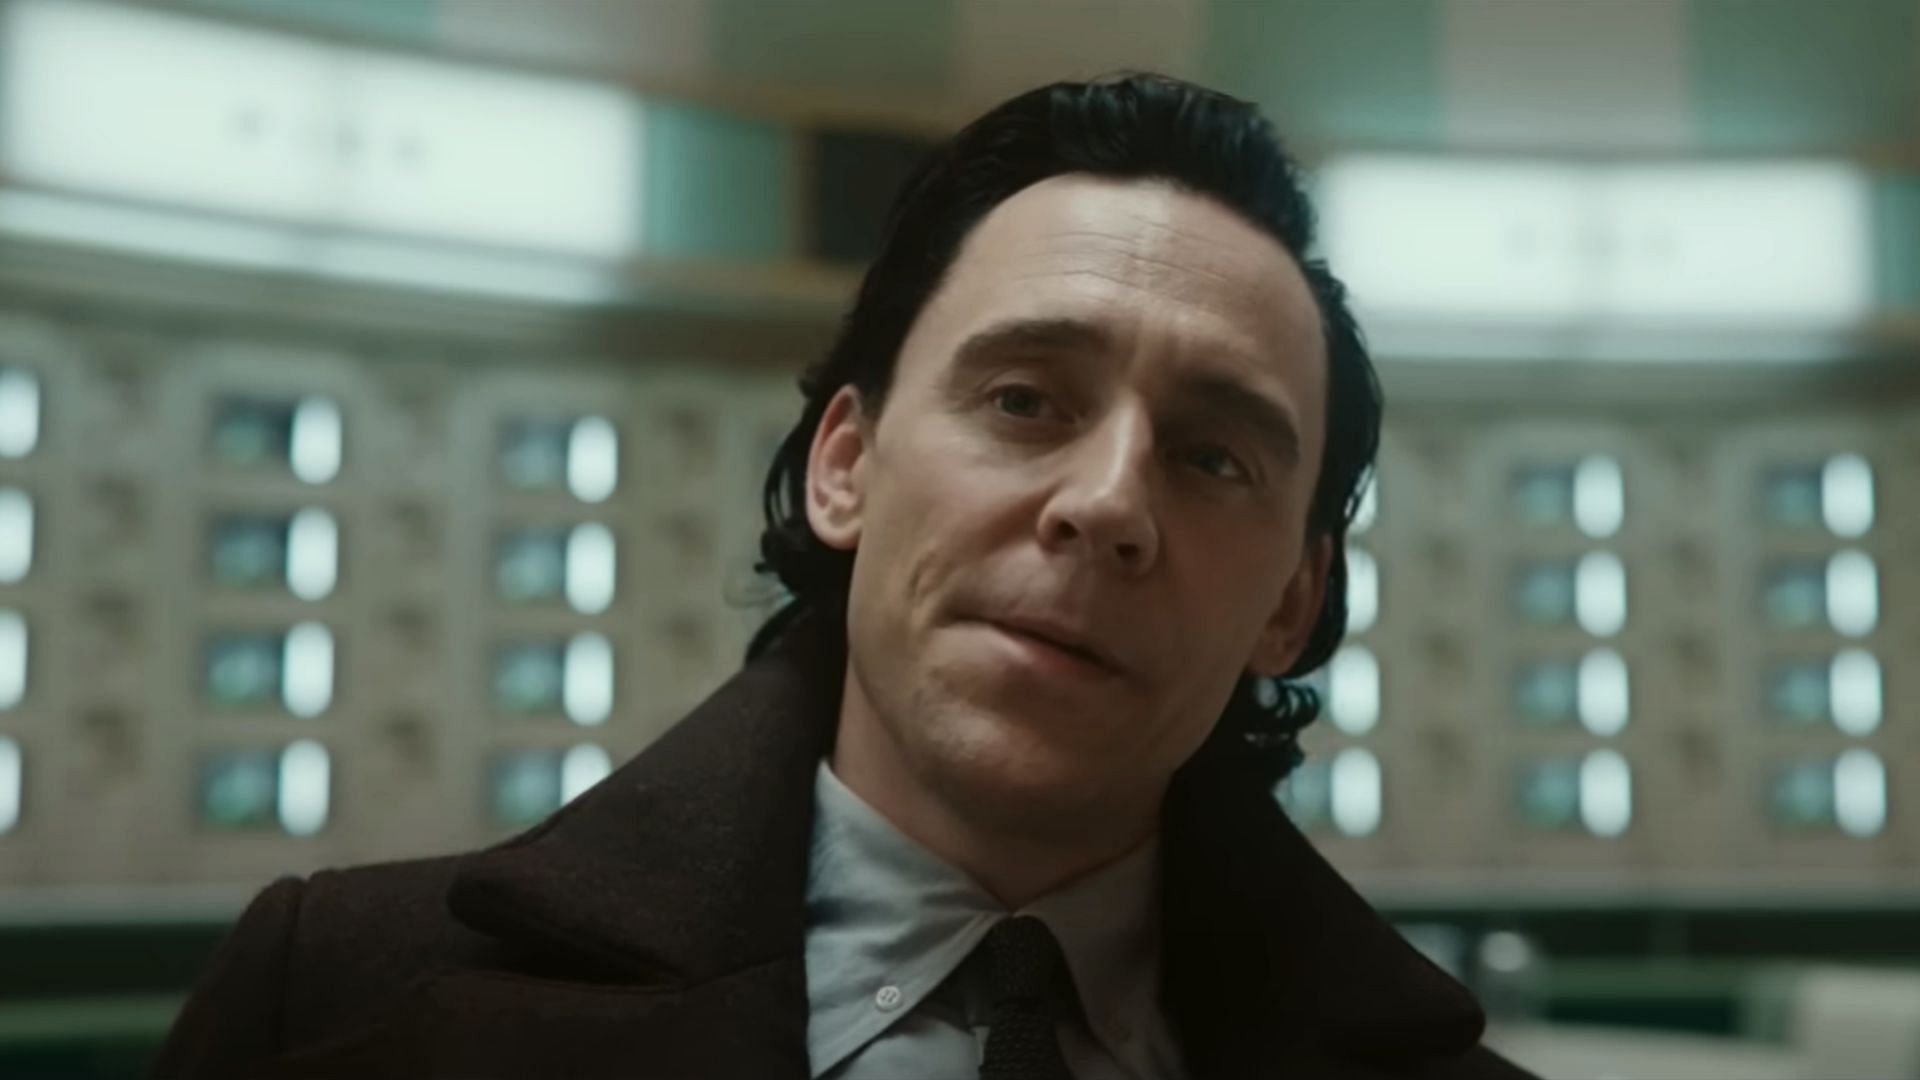 Loki actor Tom Hiddleston claimed the role changed his life (Image via Disney+)